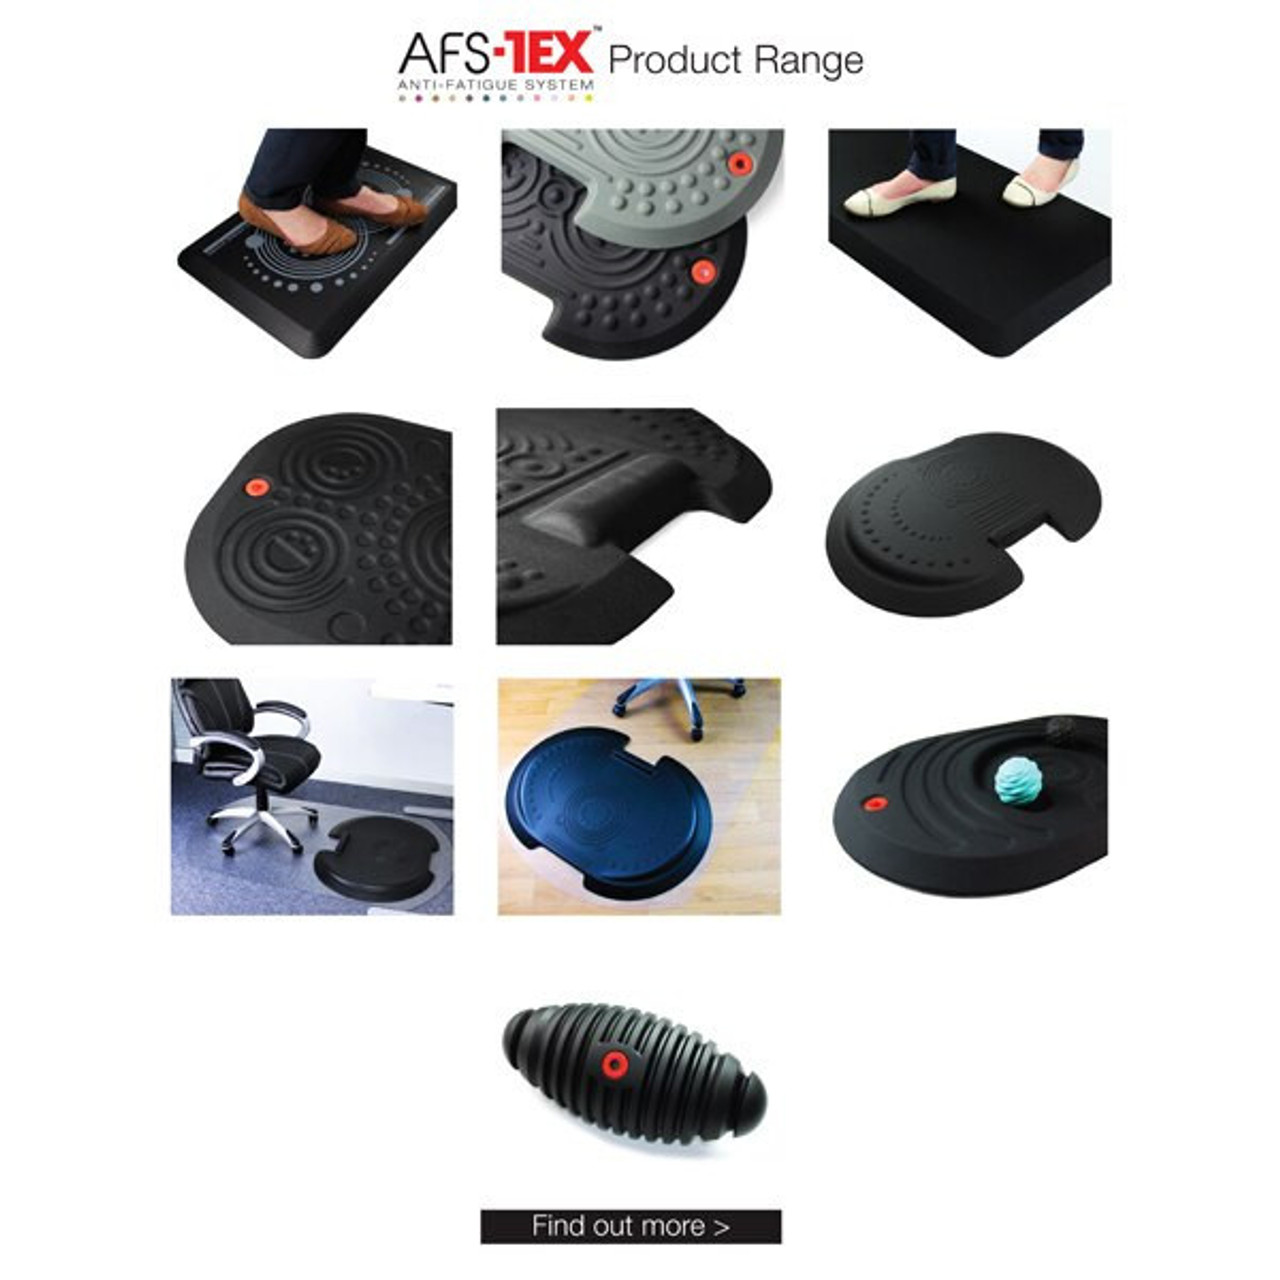 https://cdn11.bigcommerce.com/s-fjwps1jbkv/images/stencil/1280x1280/products/275/2989/afs-tex-active-standing-platform-or-premium-anti-fatigue-comfort-mat-with-foot-massage-roller-balls-for-standing-desks__49307.1688987563.jpg?c=2?imbypass=on